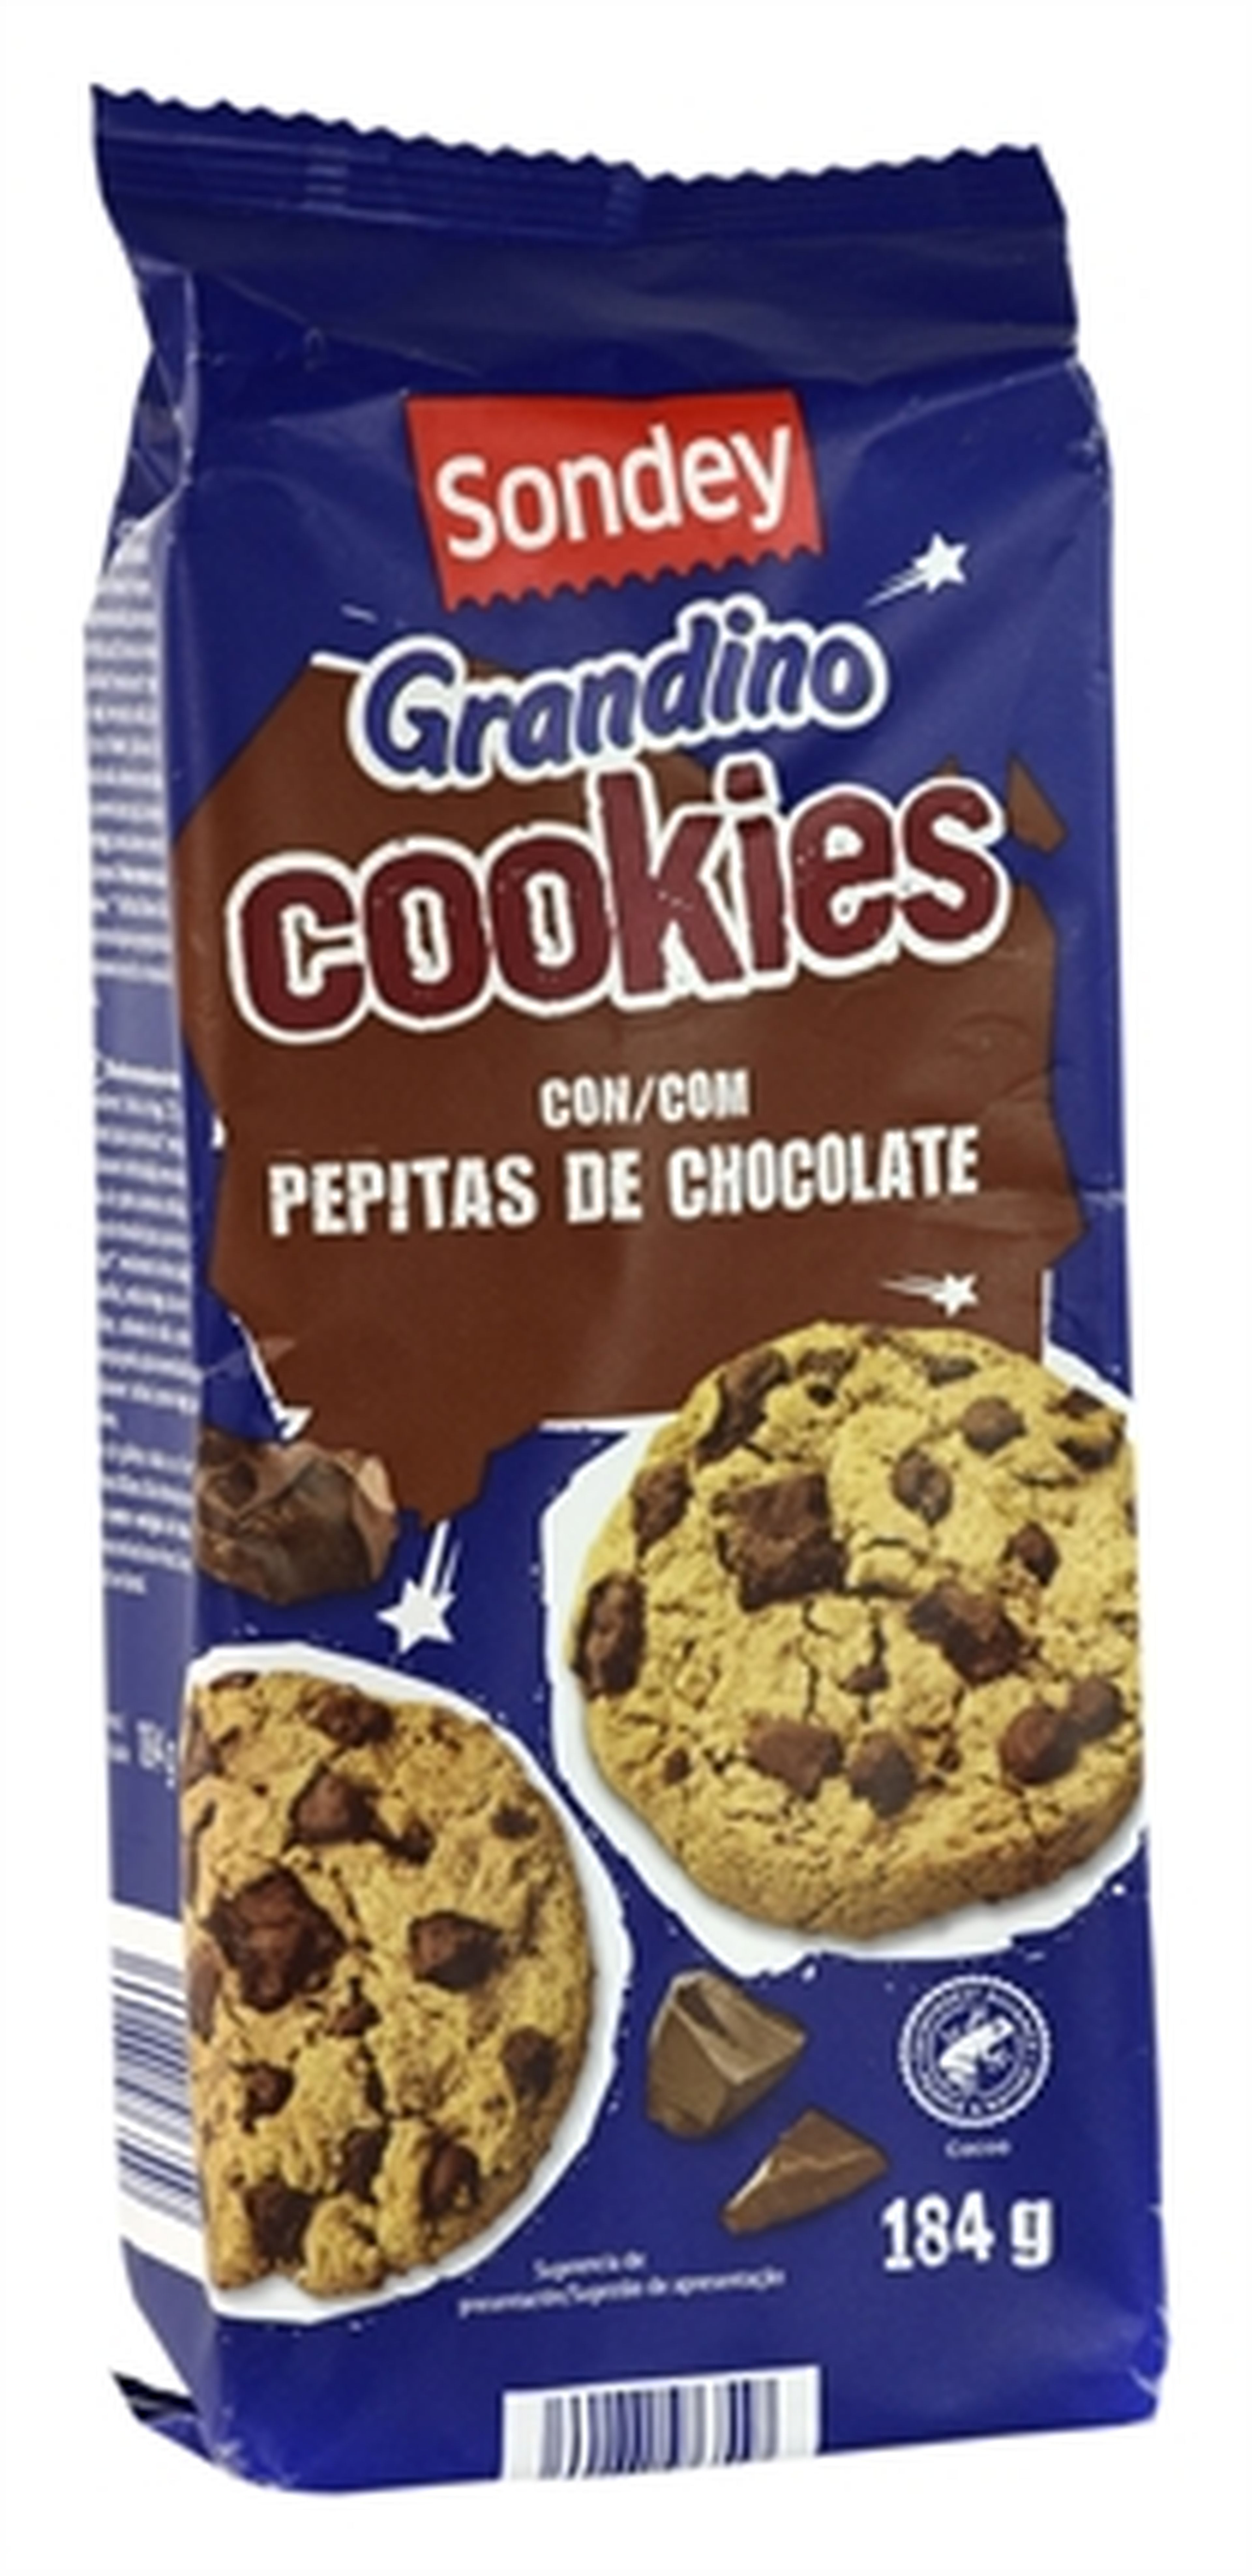 Cookies con pepitas de chocolate, Grandino galletas